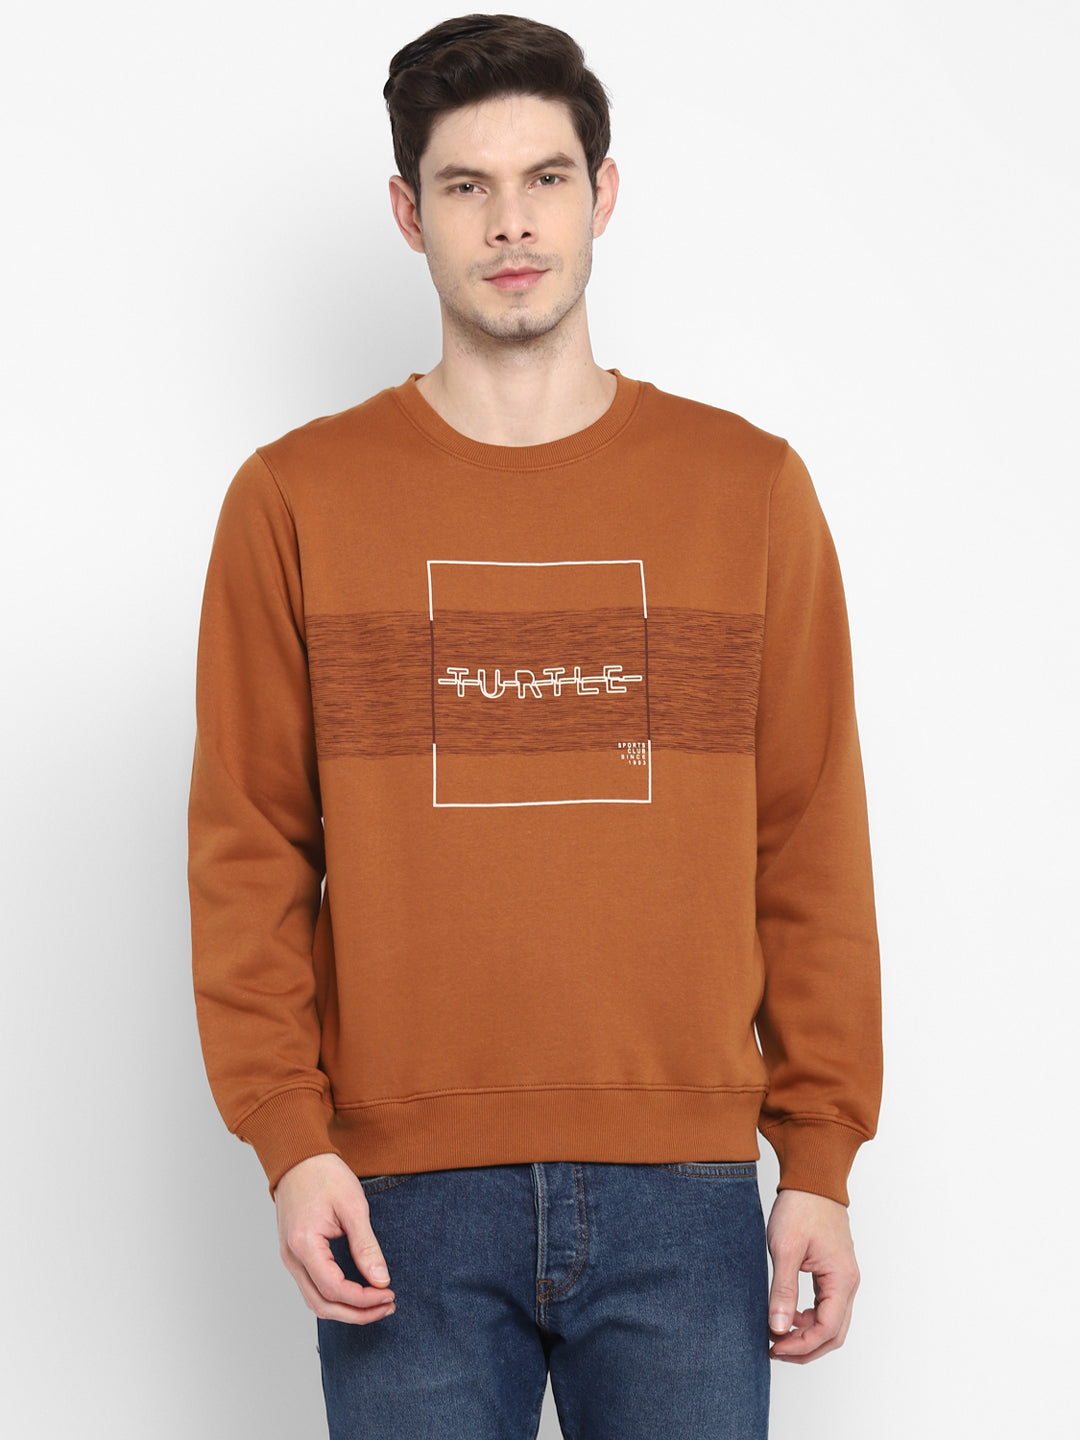 Orange Full Sleeve Round Neck Sweatshirt for Men